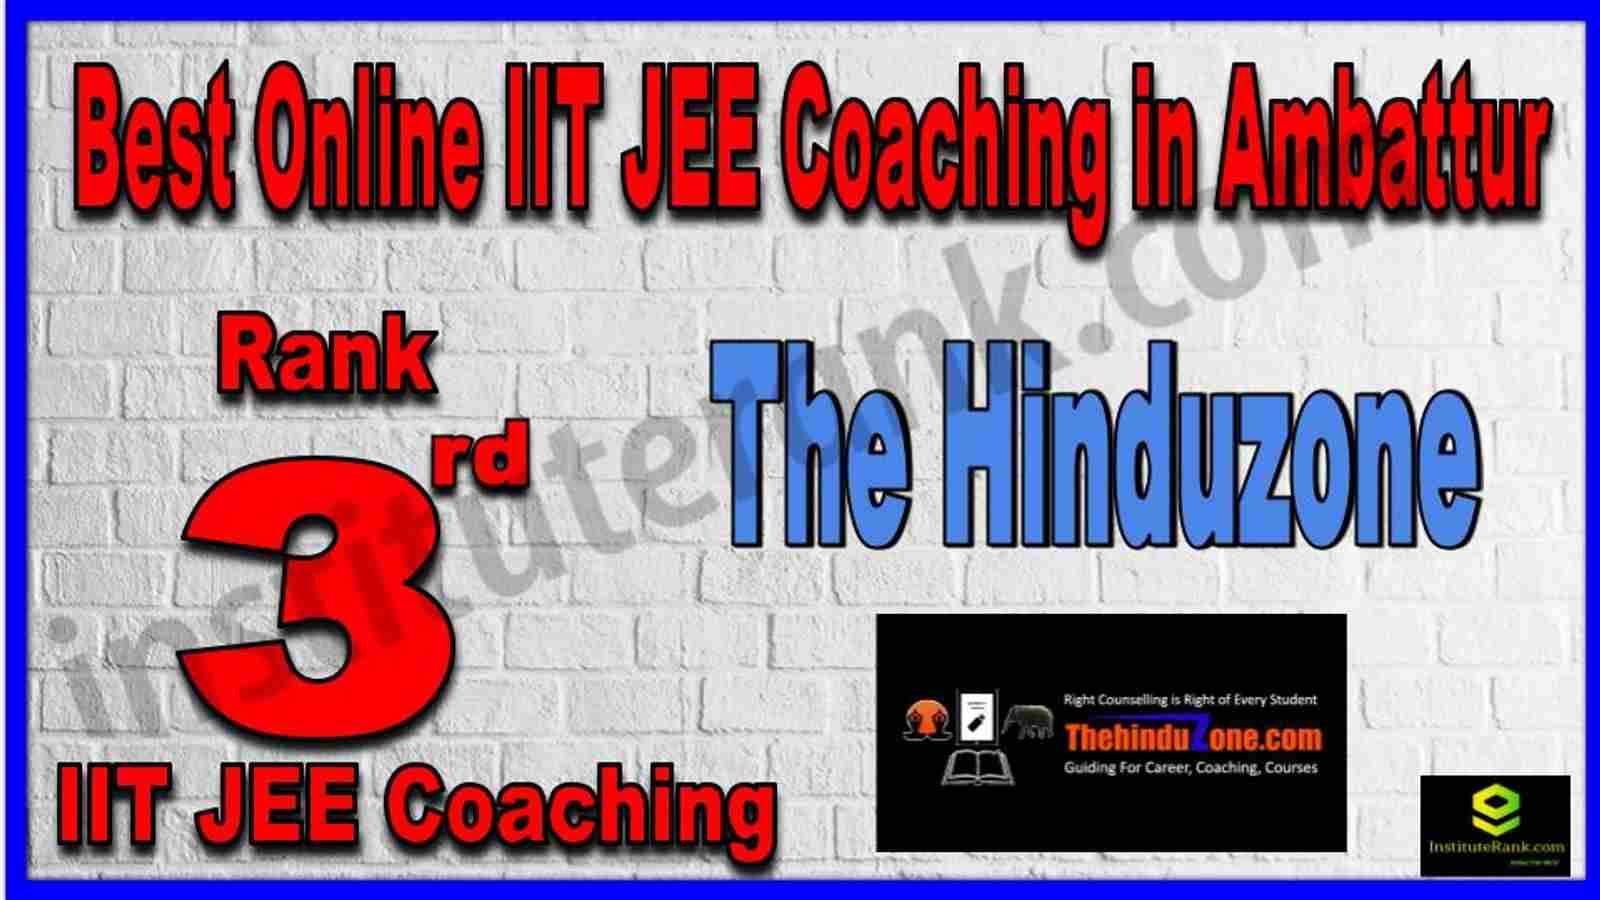 Rank 3rd Best Online IIT-JEE Coaching in Ambattur